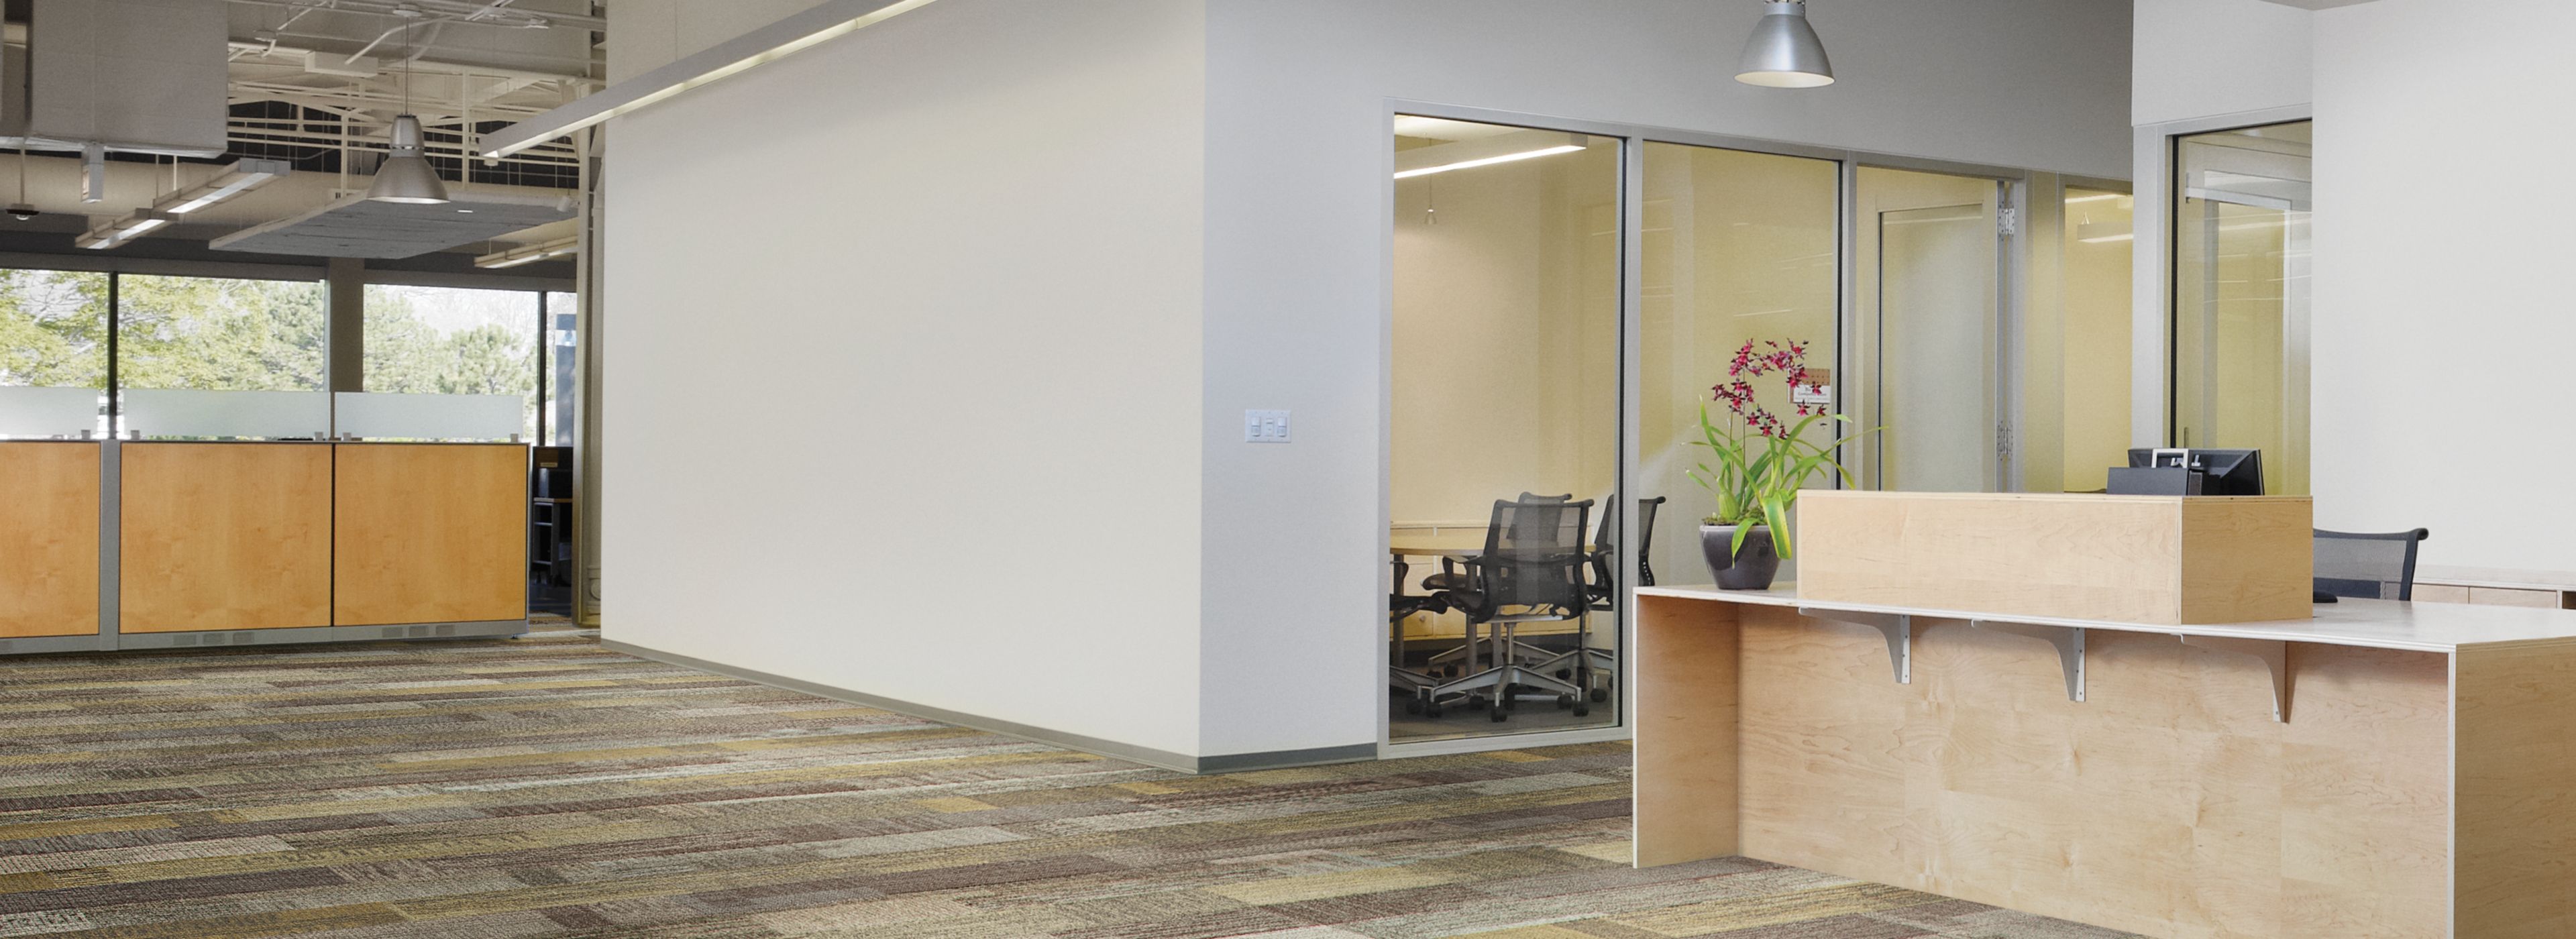 Interface Verticals plank carpet tile in open office setting with reception desk numéro d’image 1